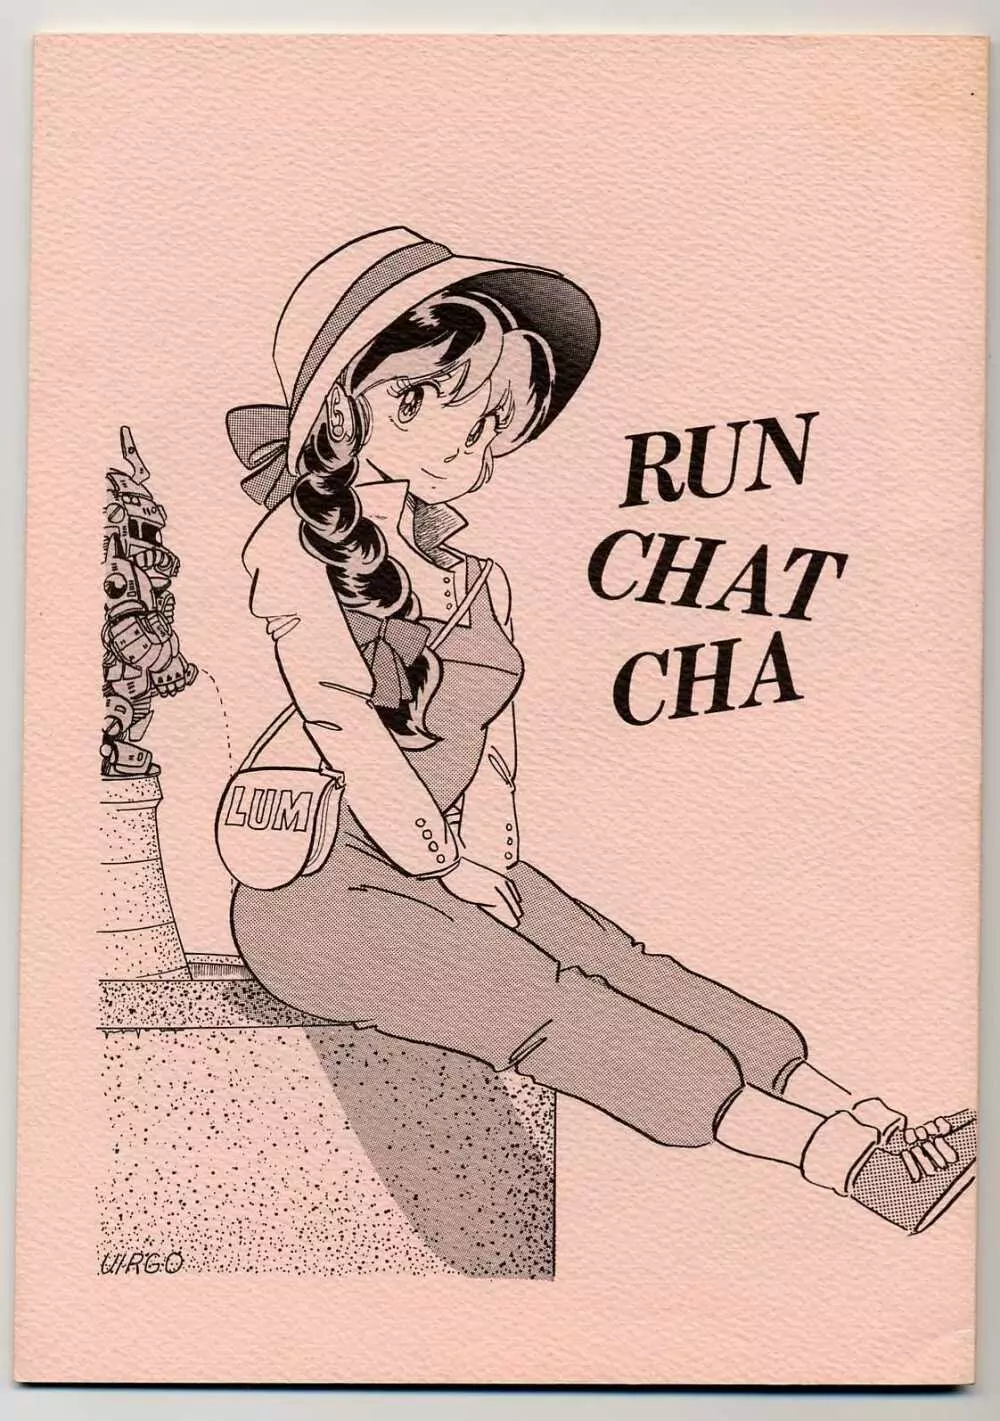 Run Chat Cha